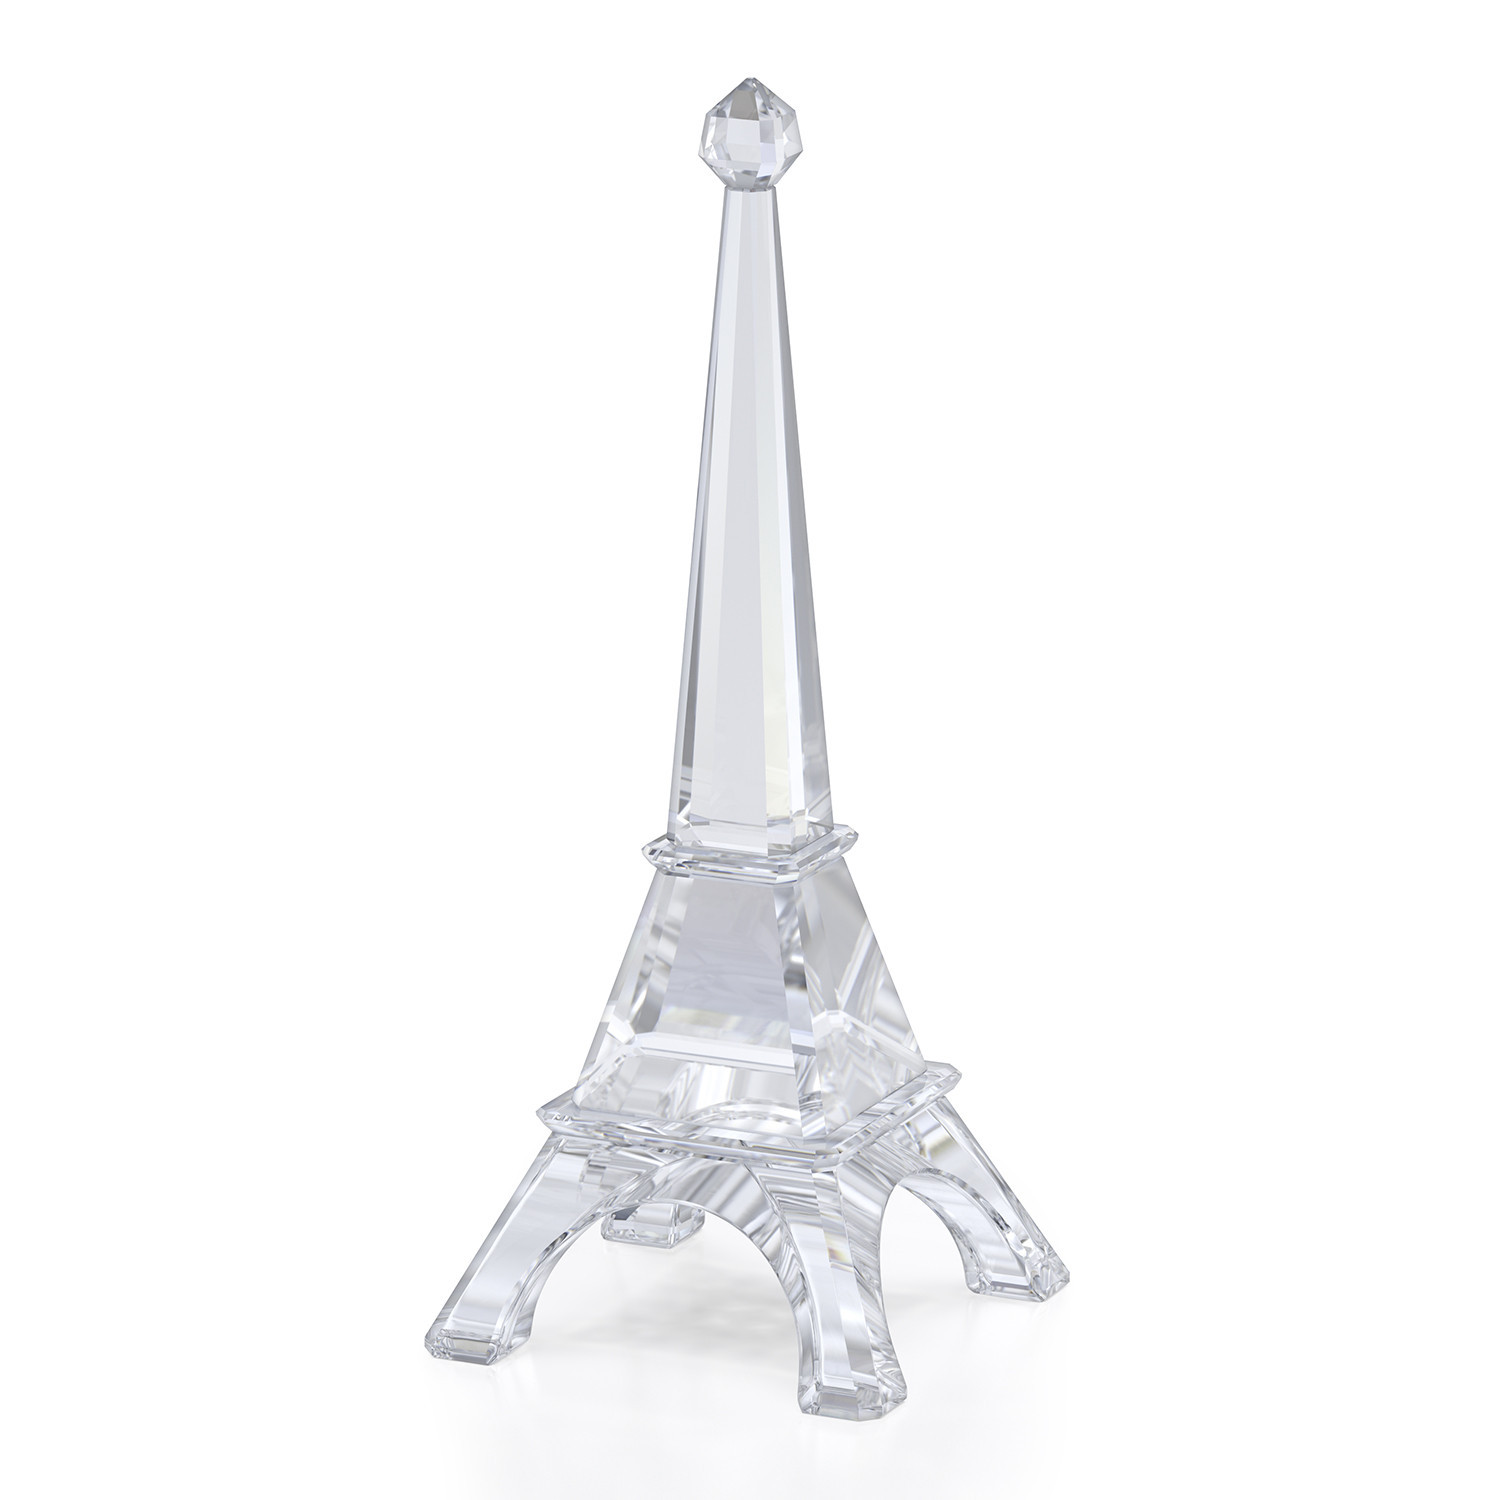 Figurine Swarovski Travel Memories Tour Eiffel